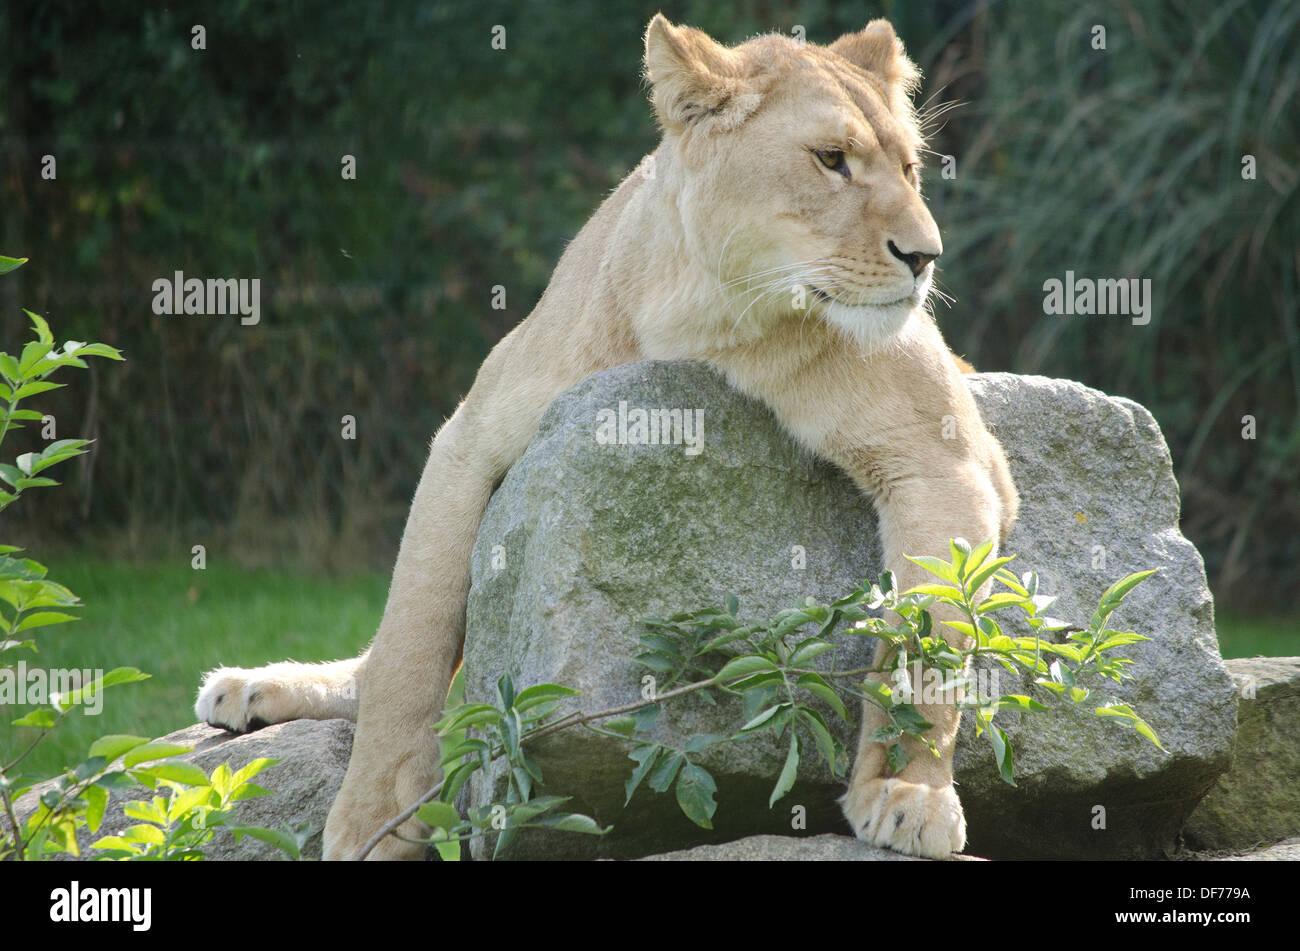 France,Bretagne,Pleugueneuc Village,Zoo Boubansais,Lioness, animal, Animals Stock Photo